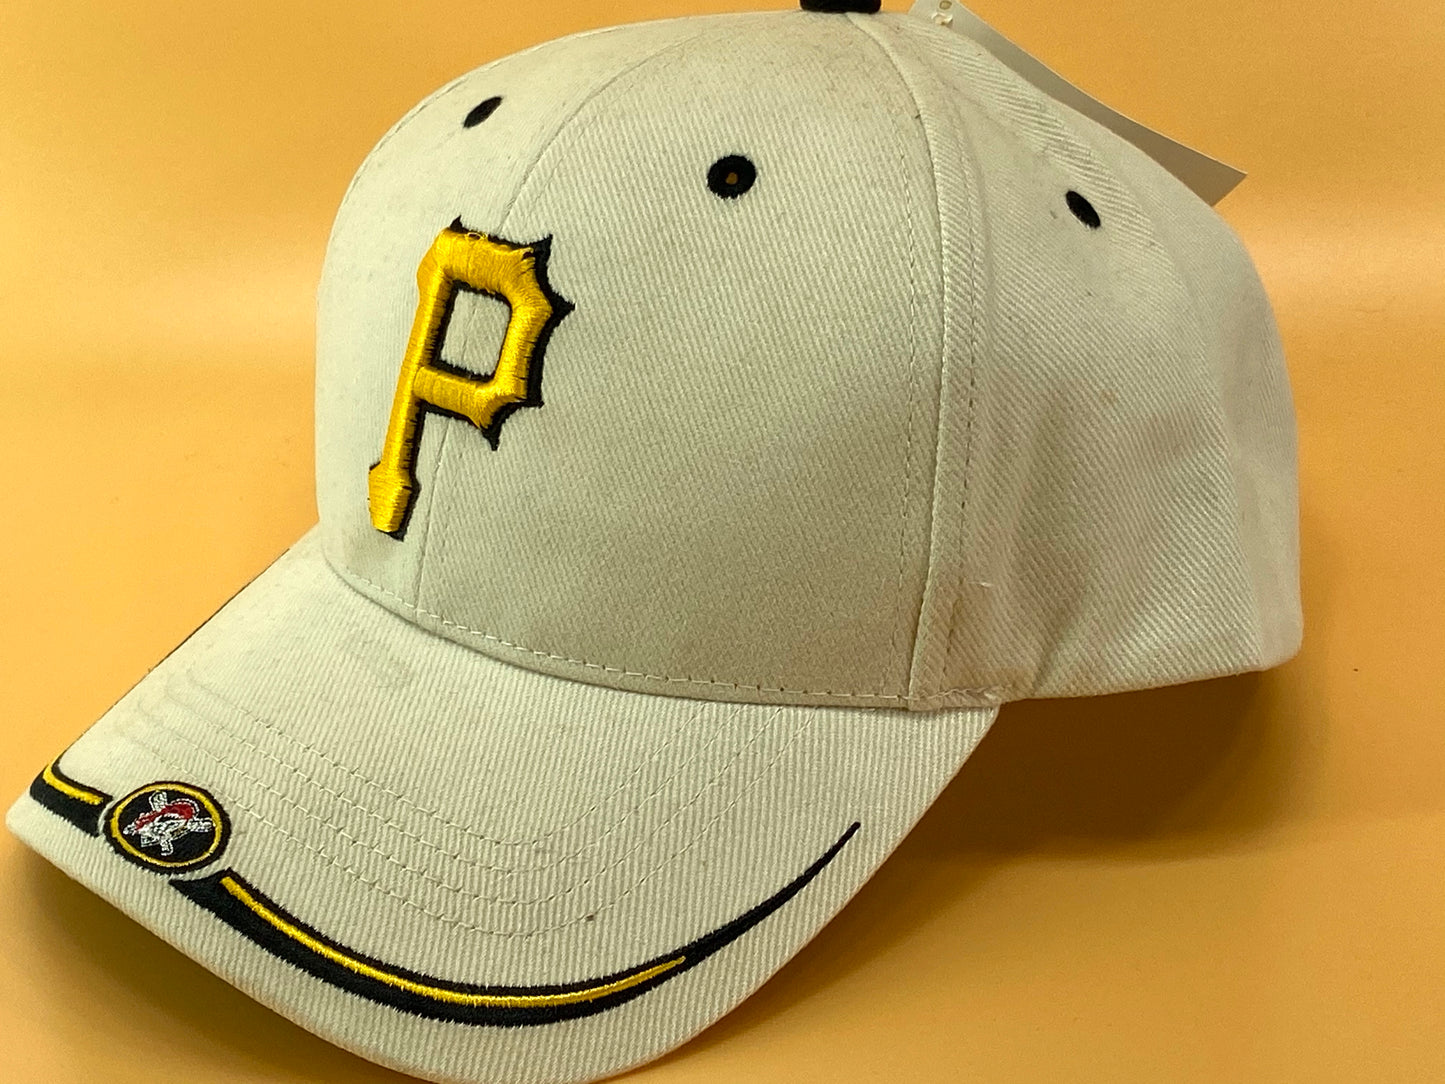 Pittsburgh Pirates NOS Vintage MLB Cream "Stache" Cap by Twins Enterprise